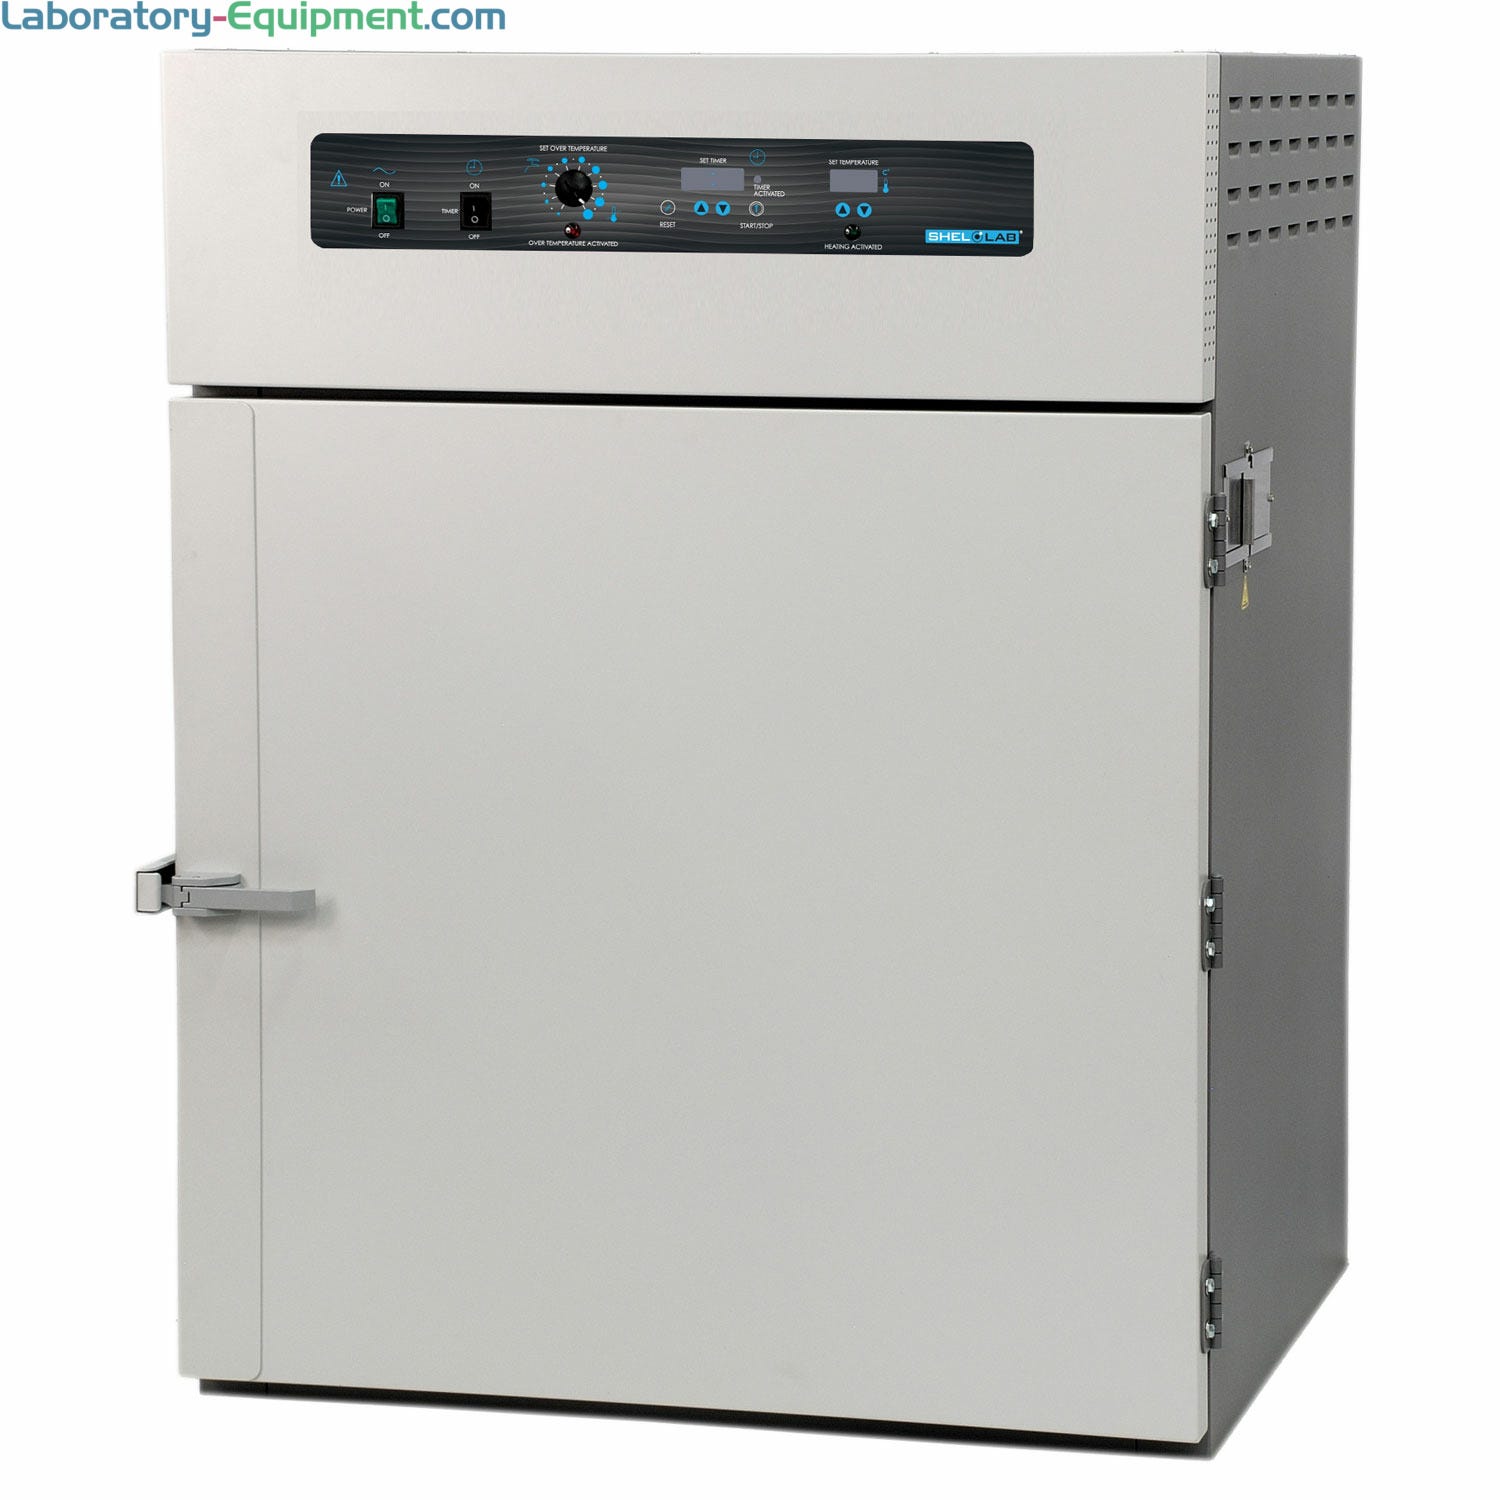 https://www.laboratory-equipment.com/media/asset-library/cache/original/watermark_e/3/s/m/smo14-2-large-capacity-force-air-multi-purpose-oven-shel-lab_2.jpg